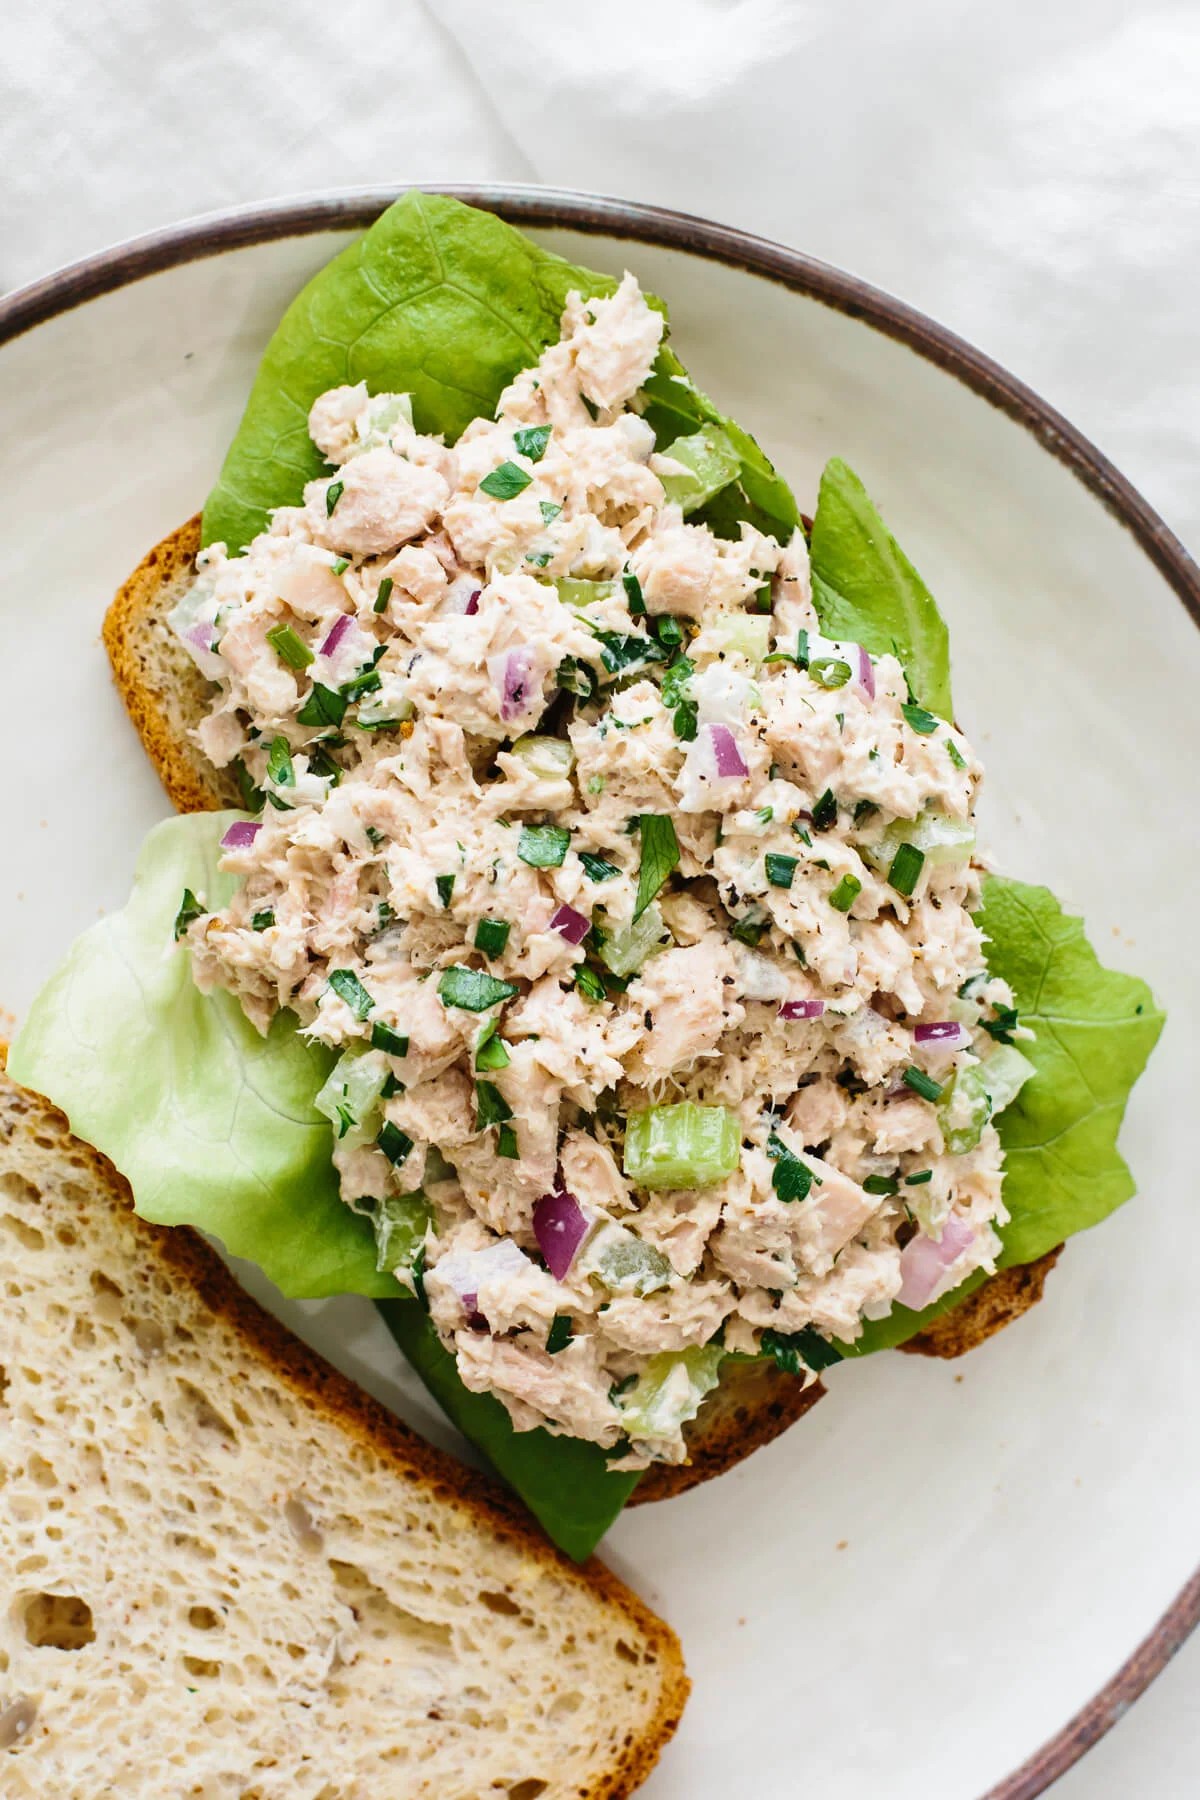 Tuna salad on a slice of bread.